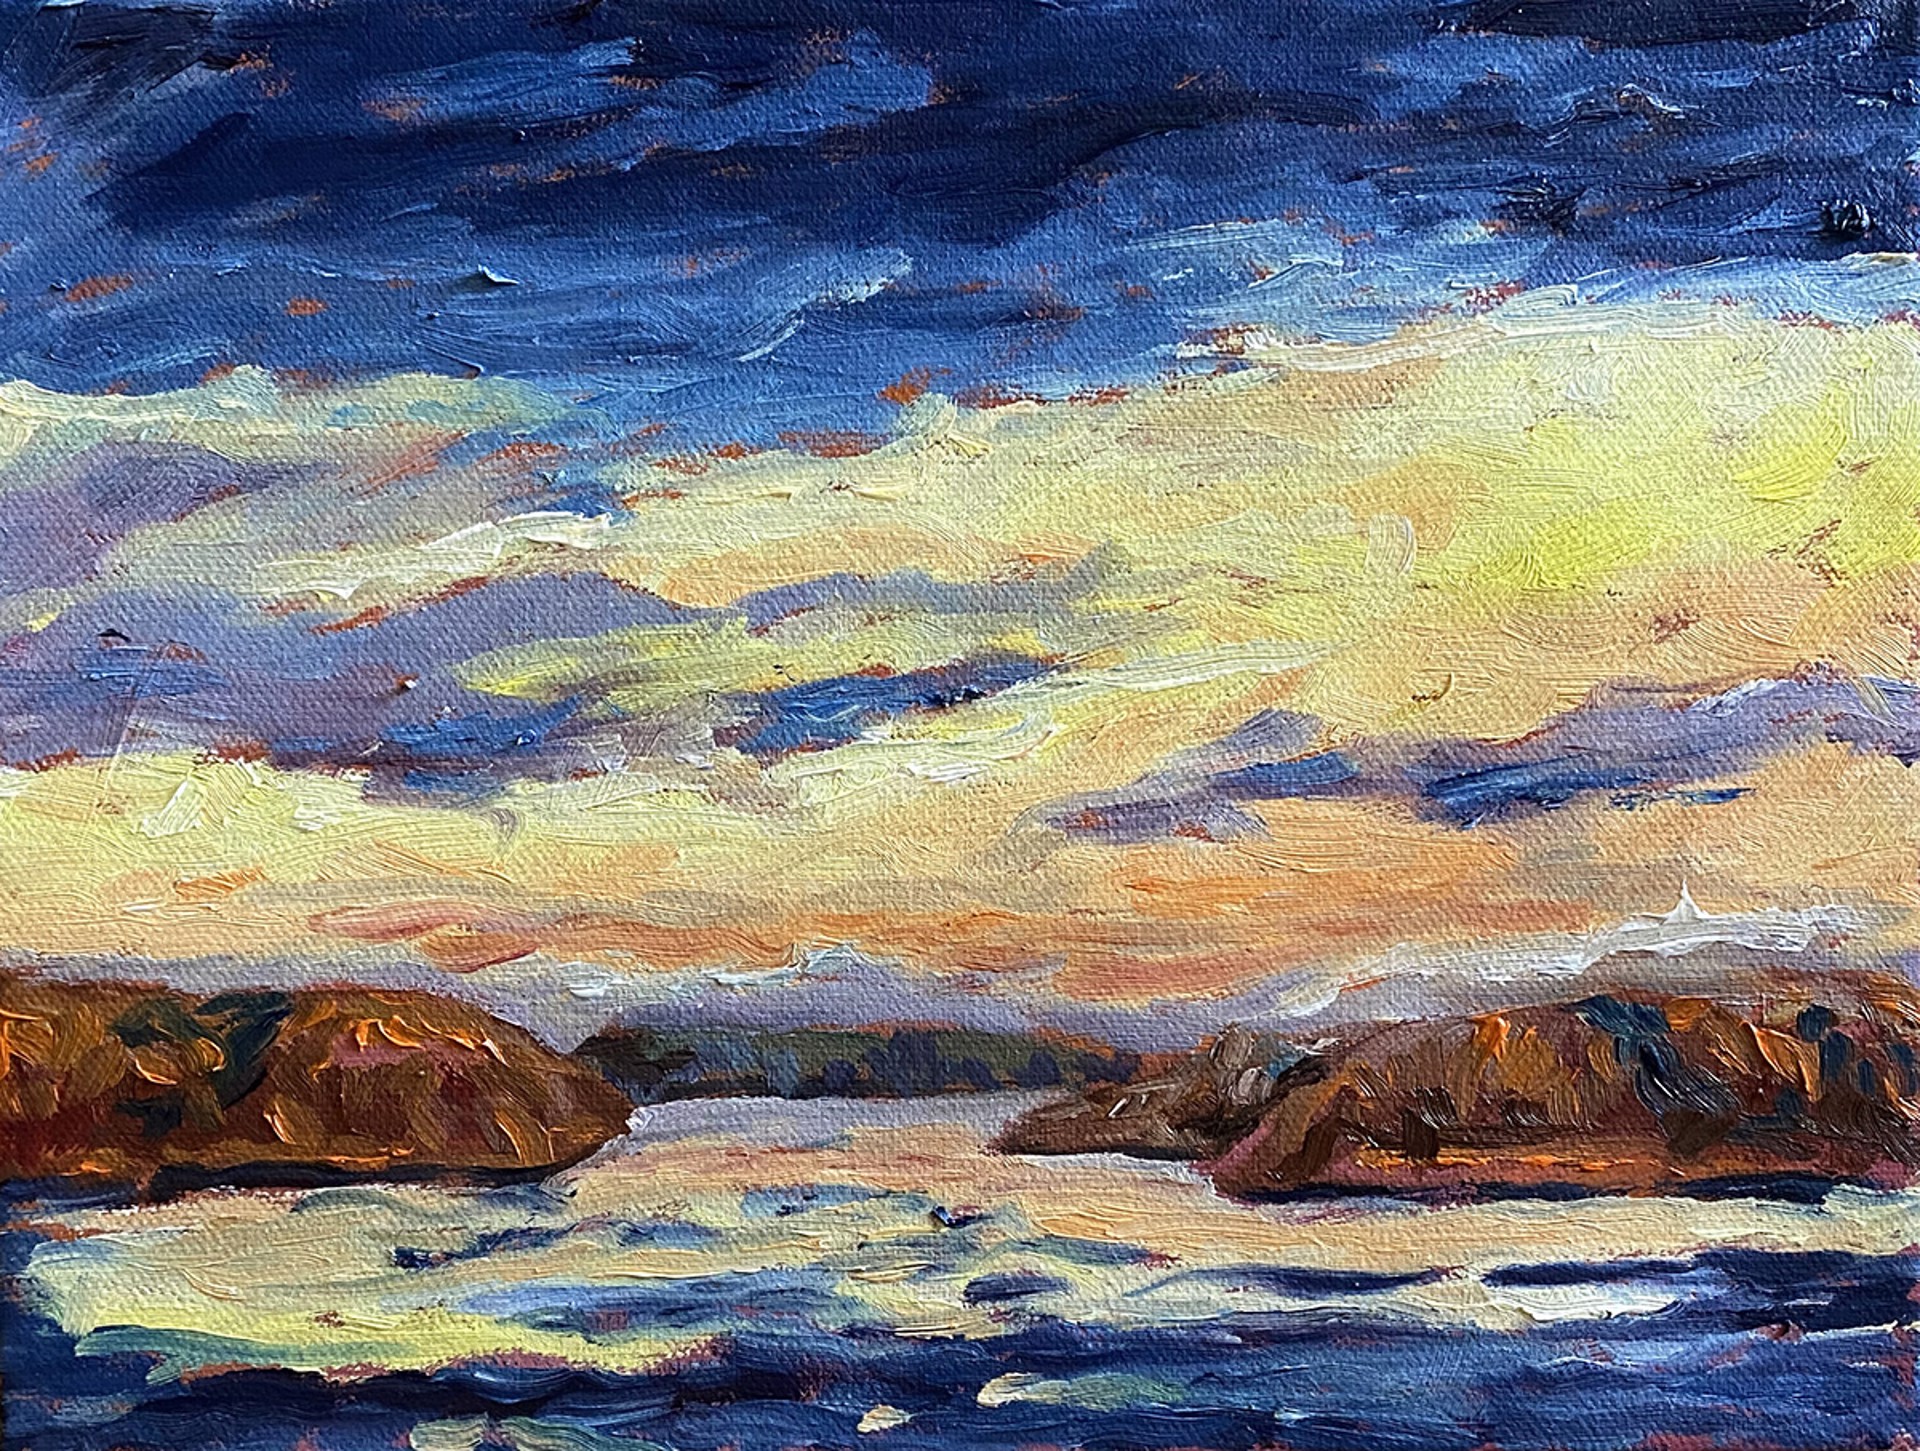 Sunset on the Lake by Wayne Medford